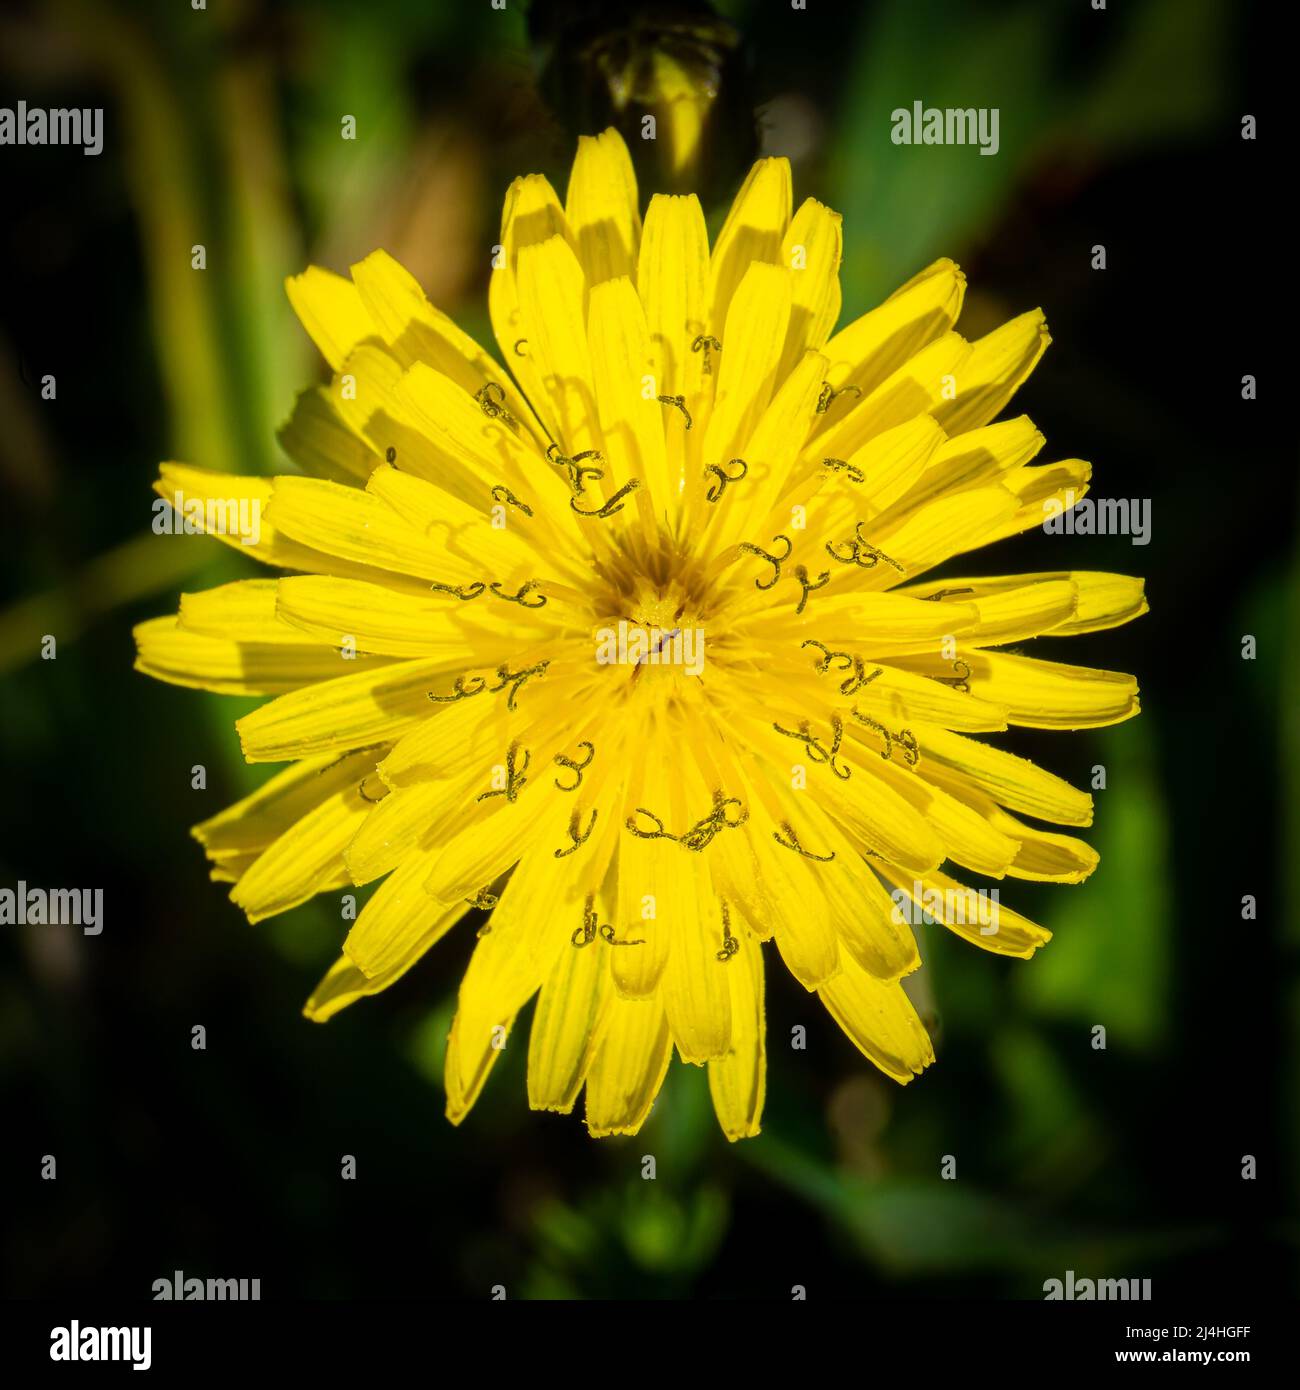 Yellow Dandelion (Taraxacum) flower isolated on green background. Beauty in nature. Stock Photo